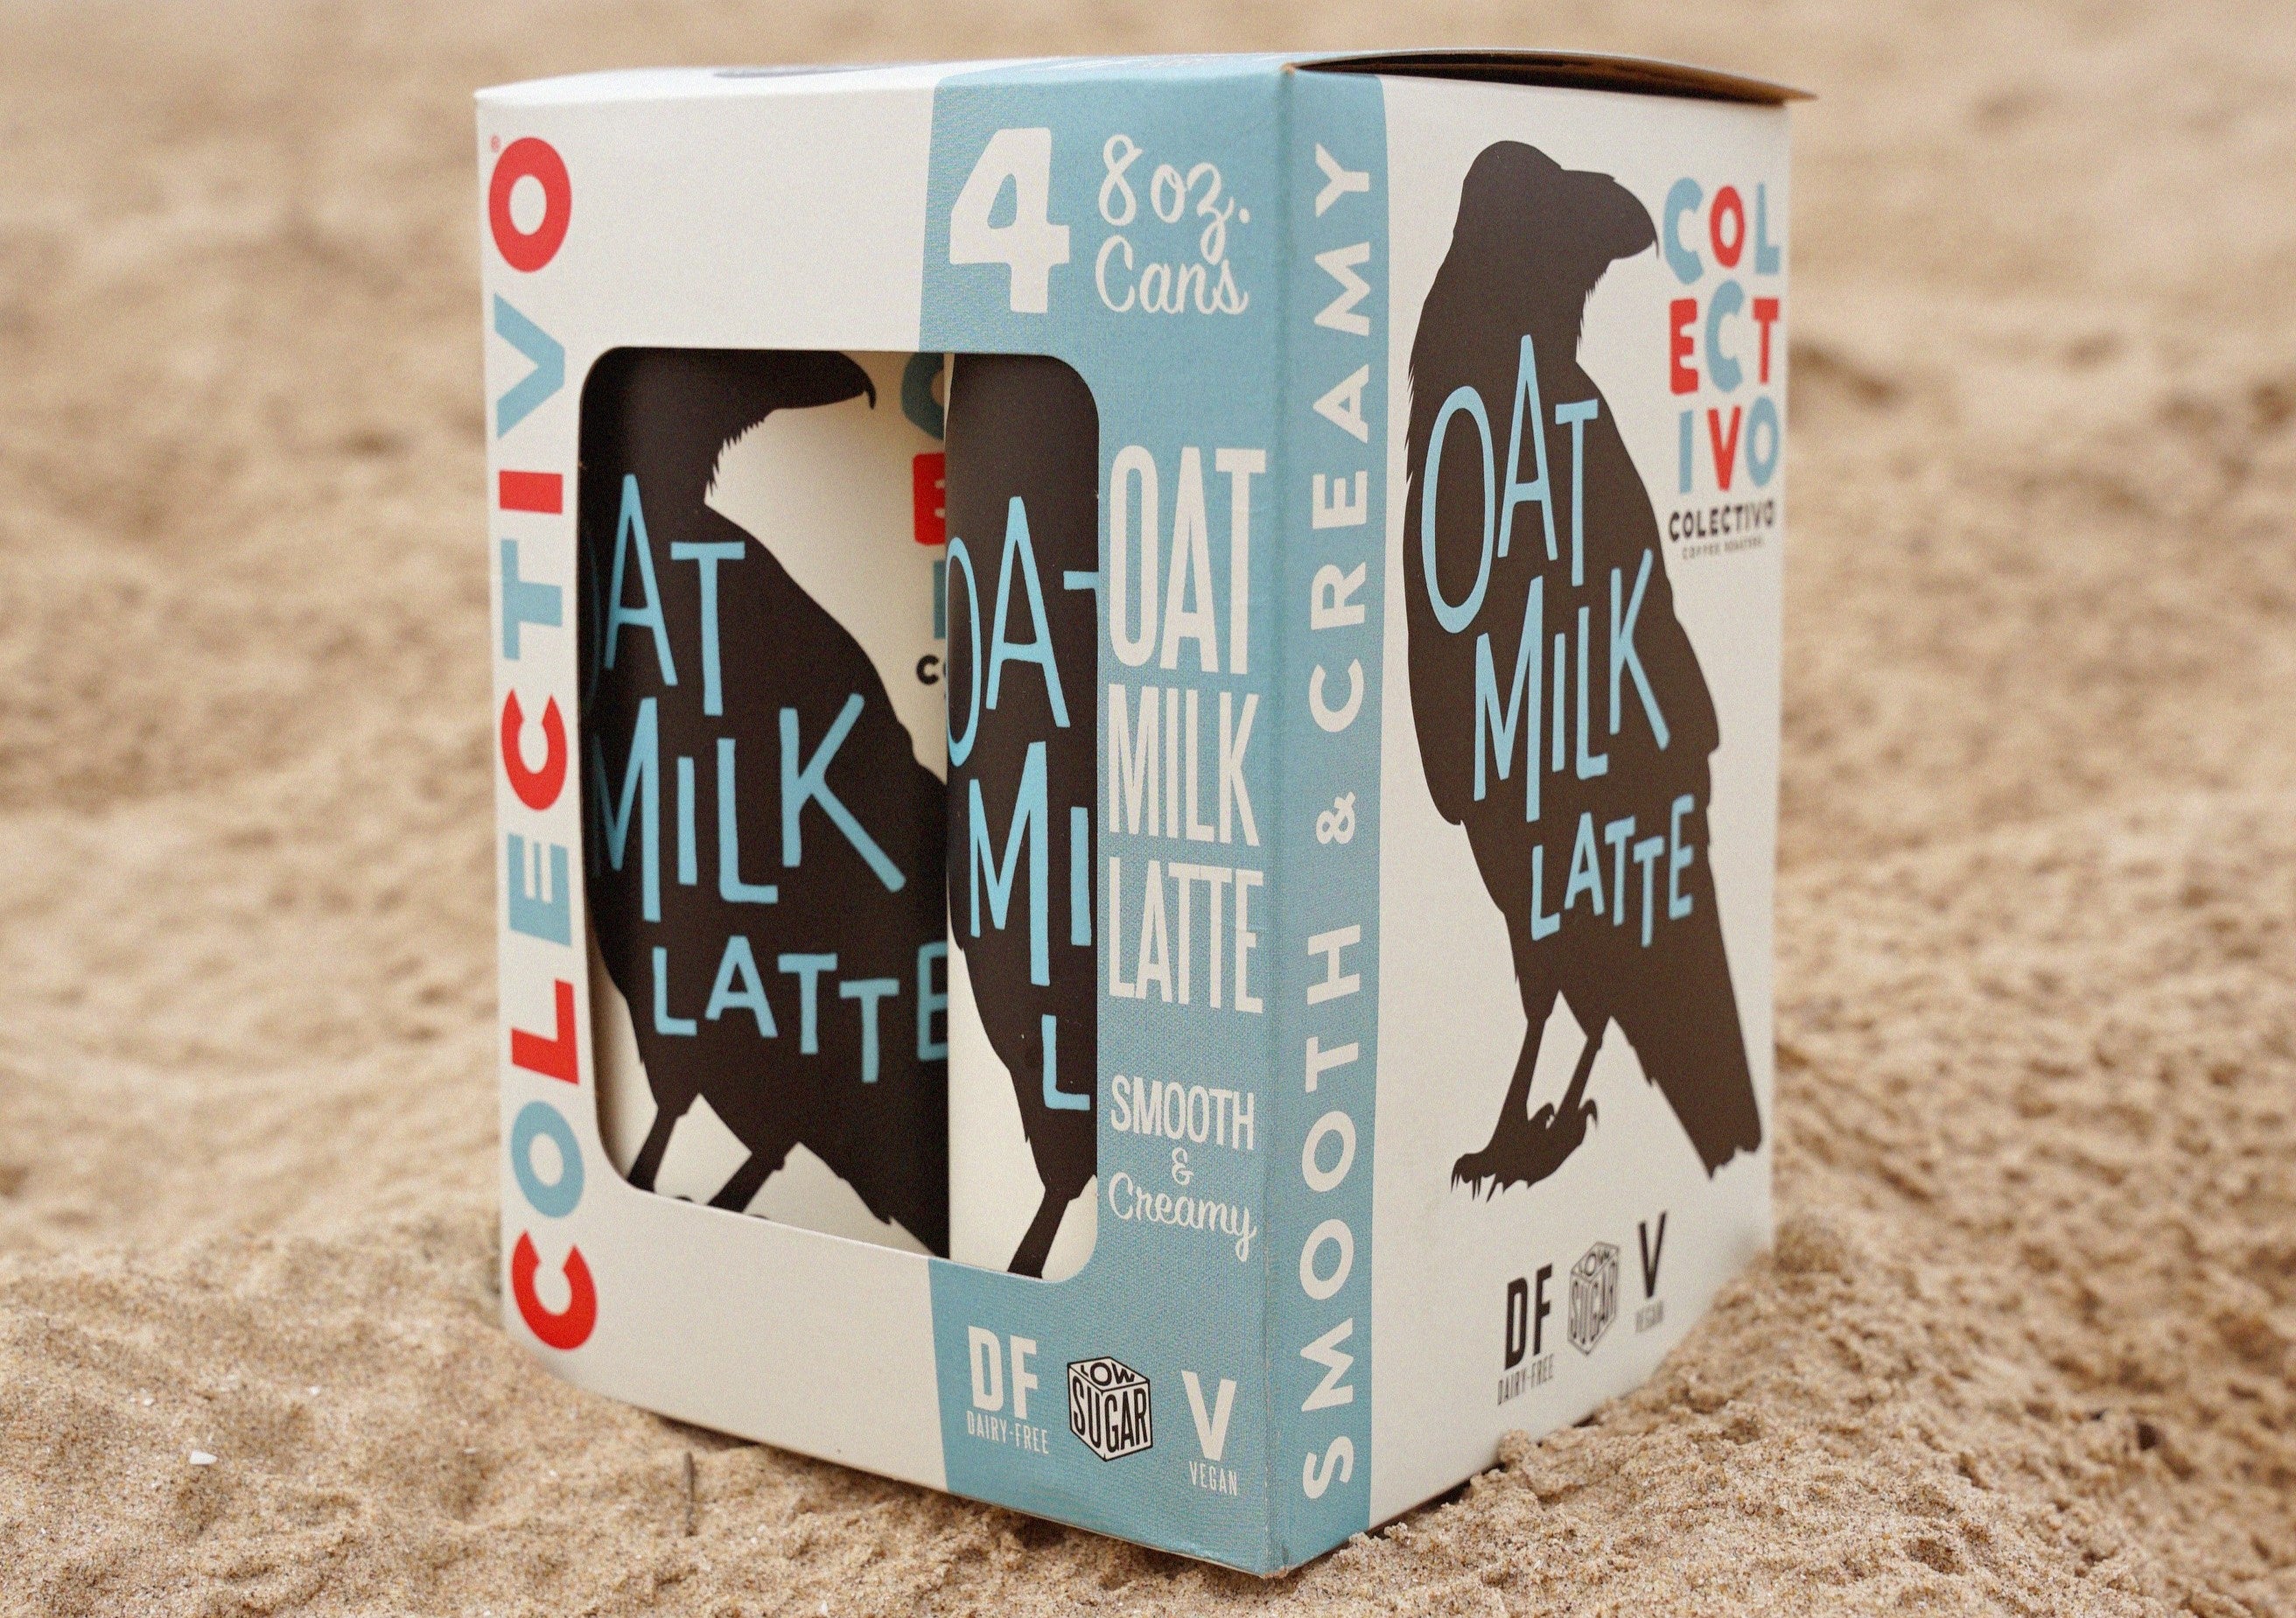 Oat Milk Lattes